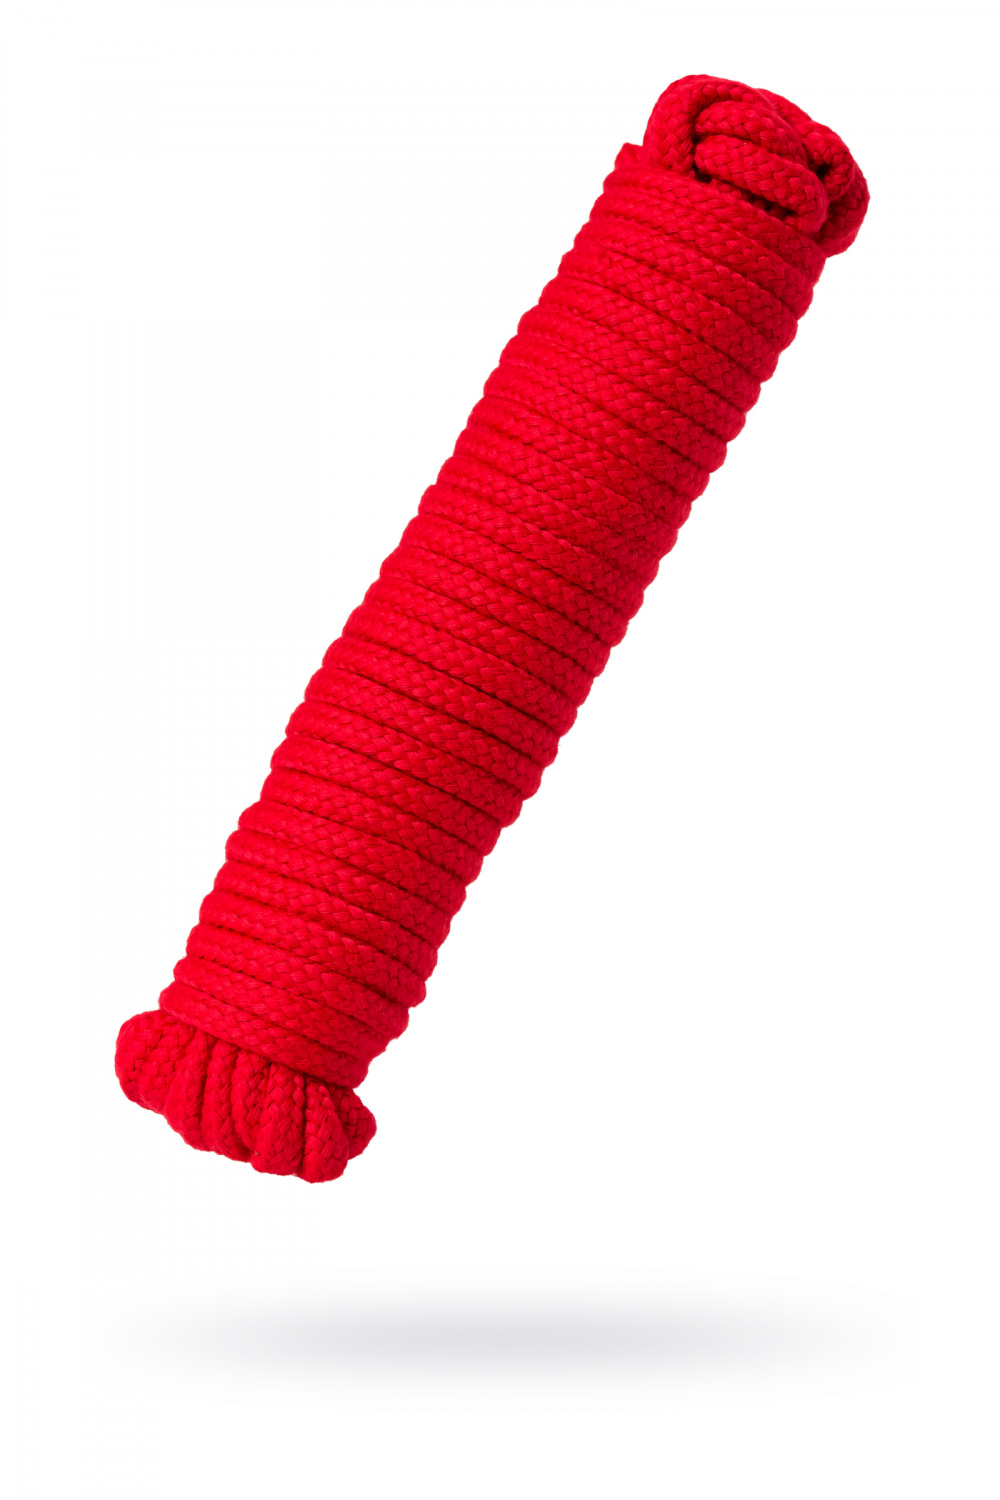 Веревка для бондажа Штучки-дрючки, текстиль, красная, 10 м, Ø 8 мм (арт. 690209)